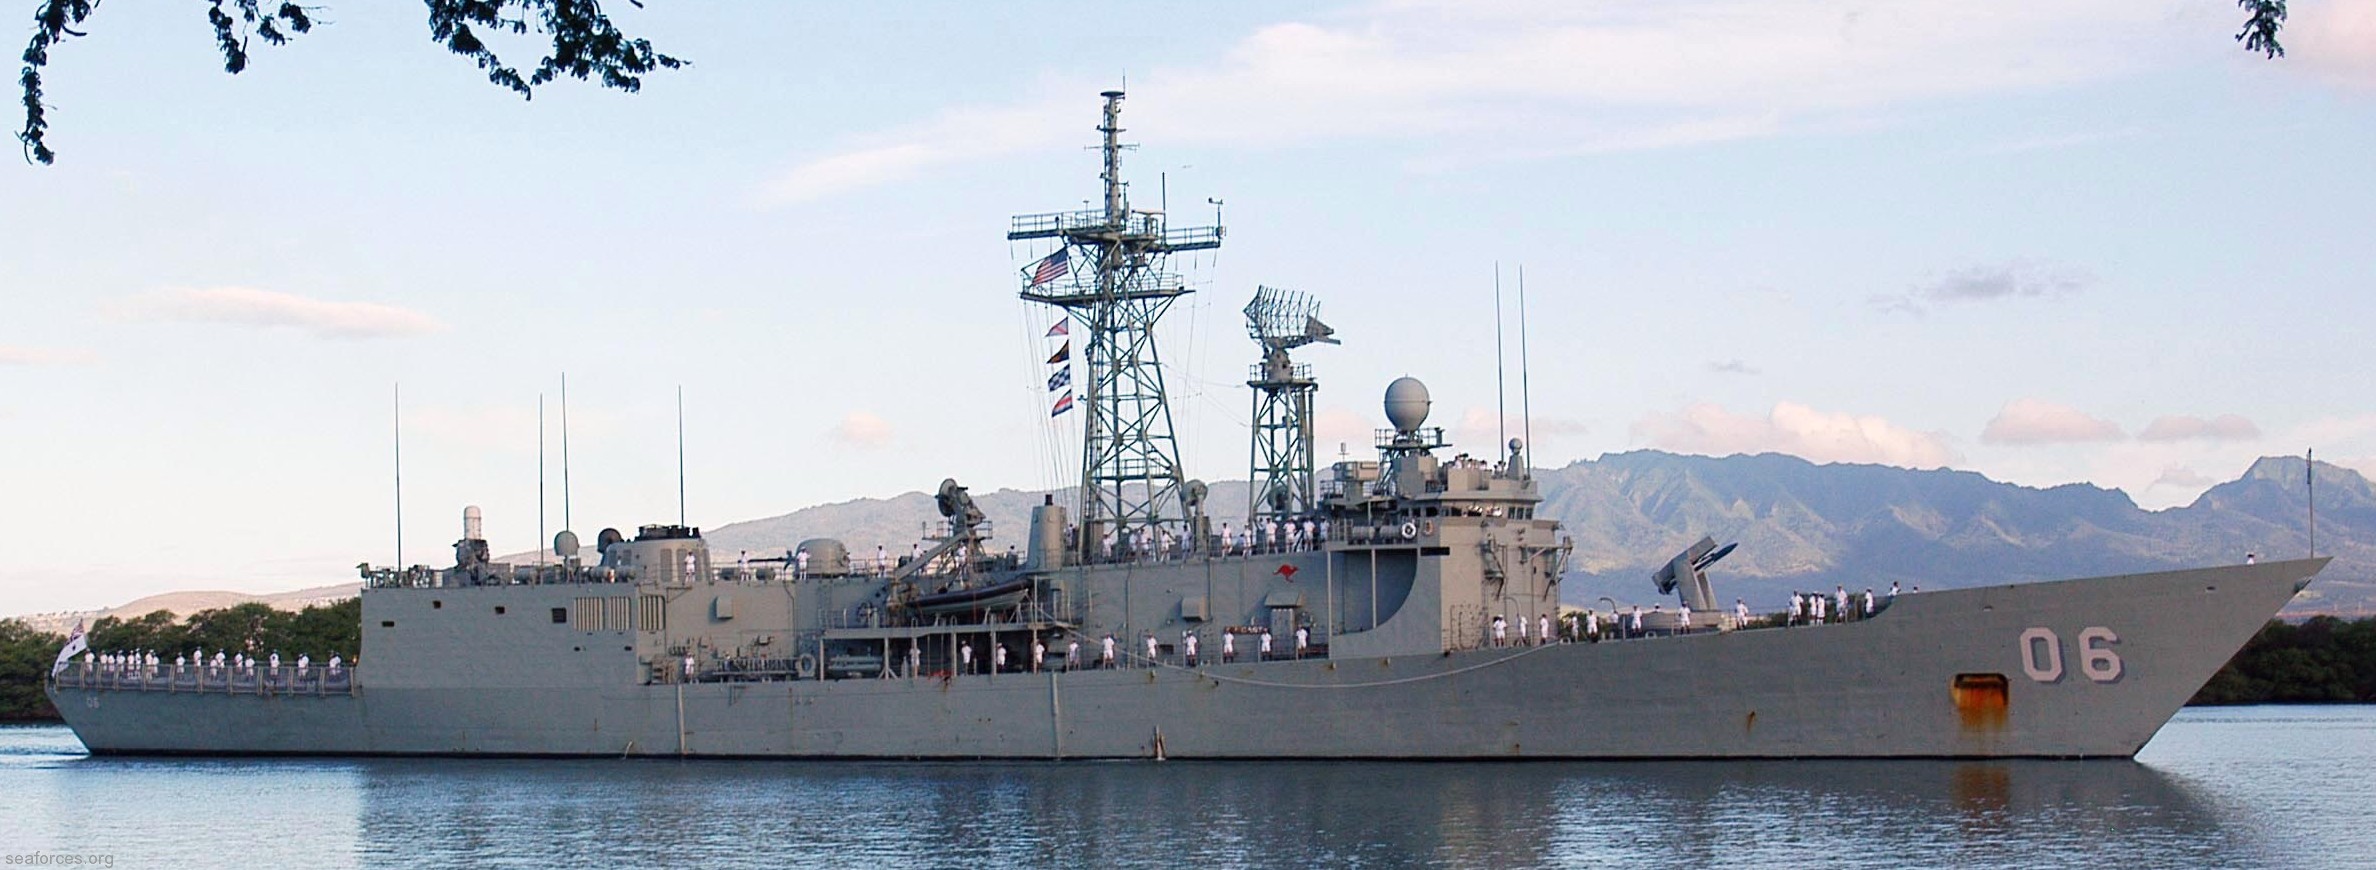 ffg-06 hmas newcastle adelaide class frigate royal australian navy 2004 02 pearl harbor